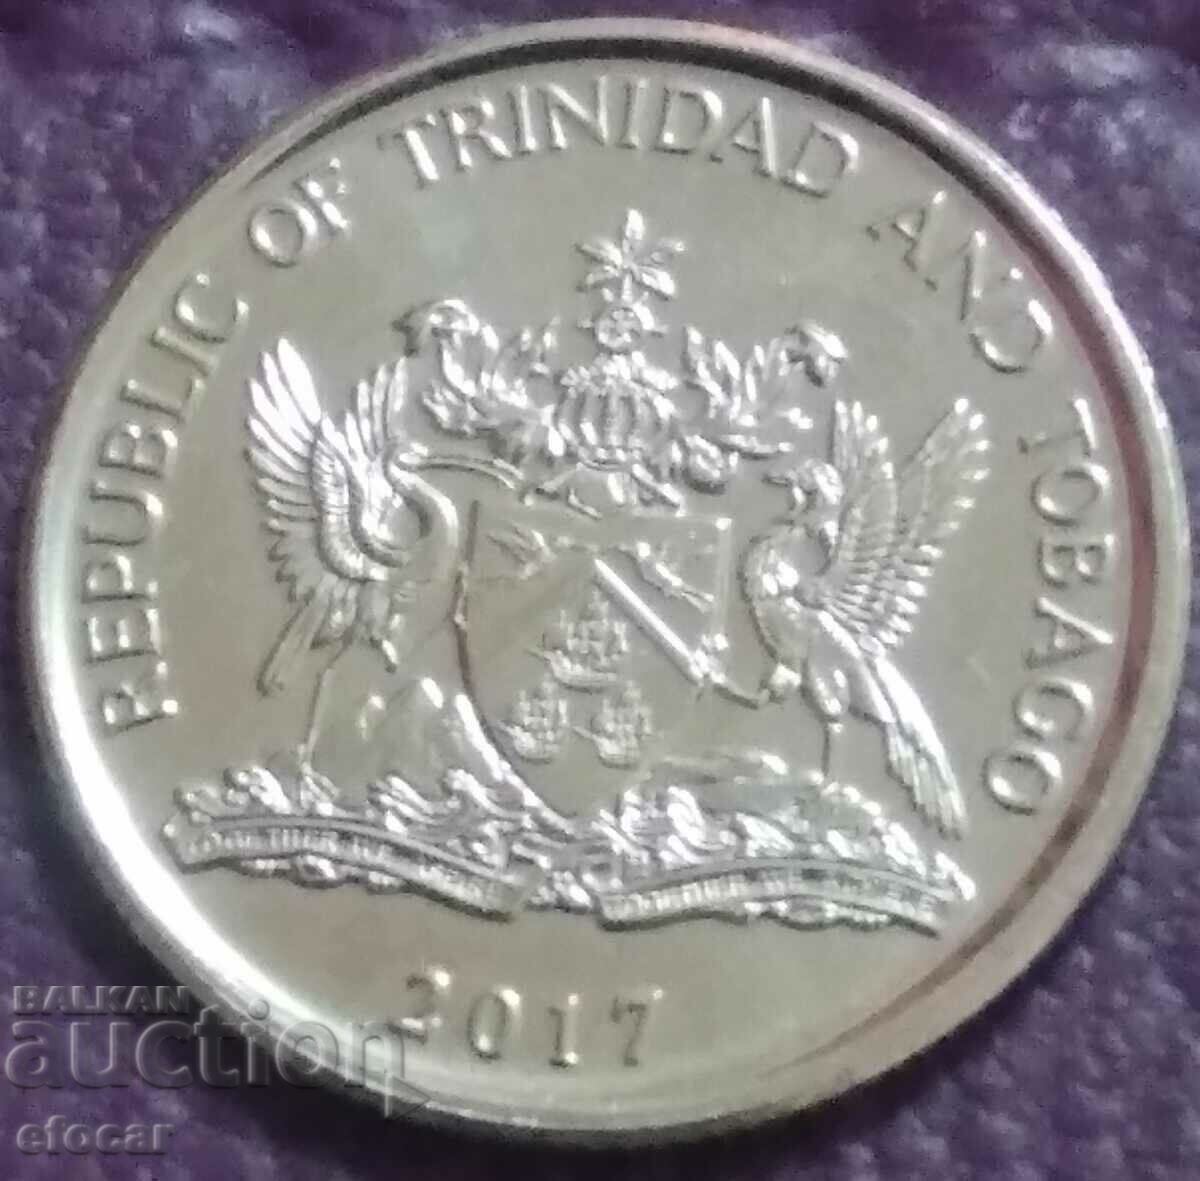 10 cenți Trinidad și Tobago 2017